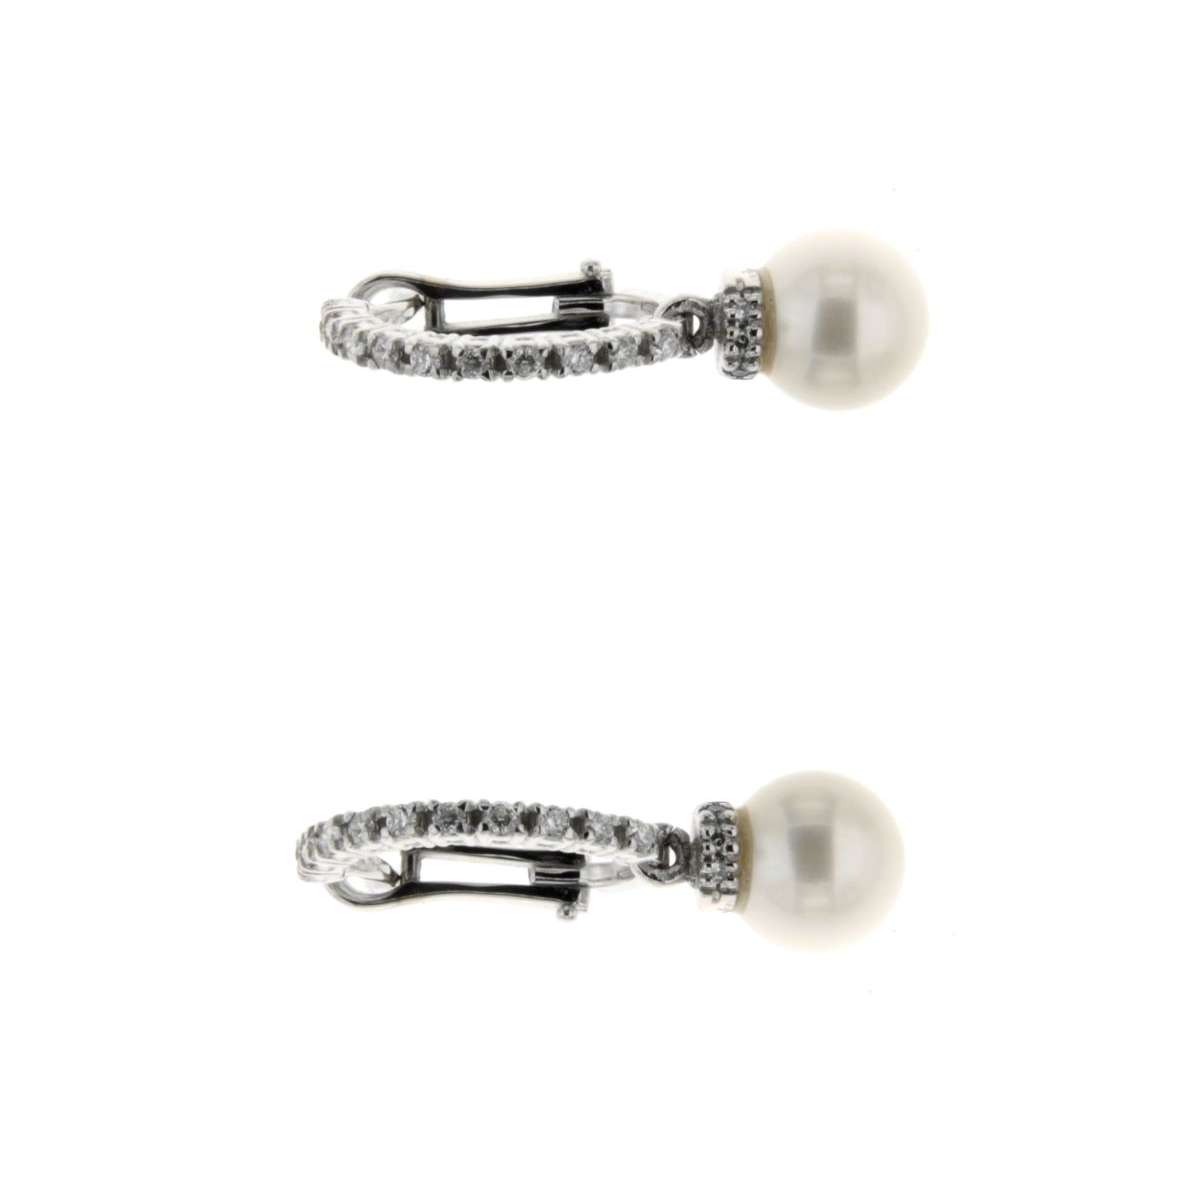 Dangling earrings pearls 5mm 0.22 carats diamonds G-VS1  